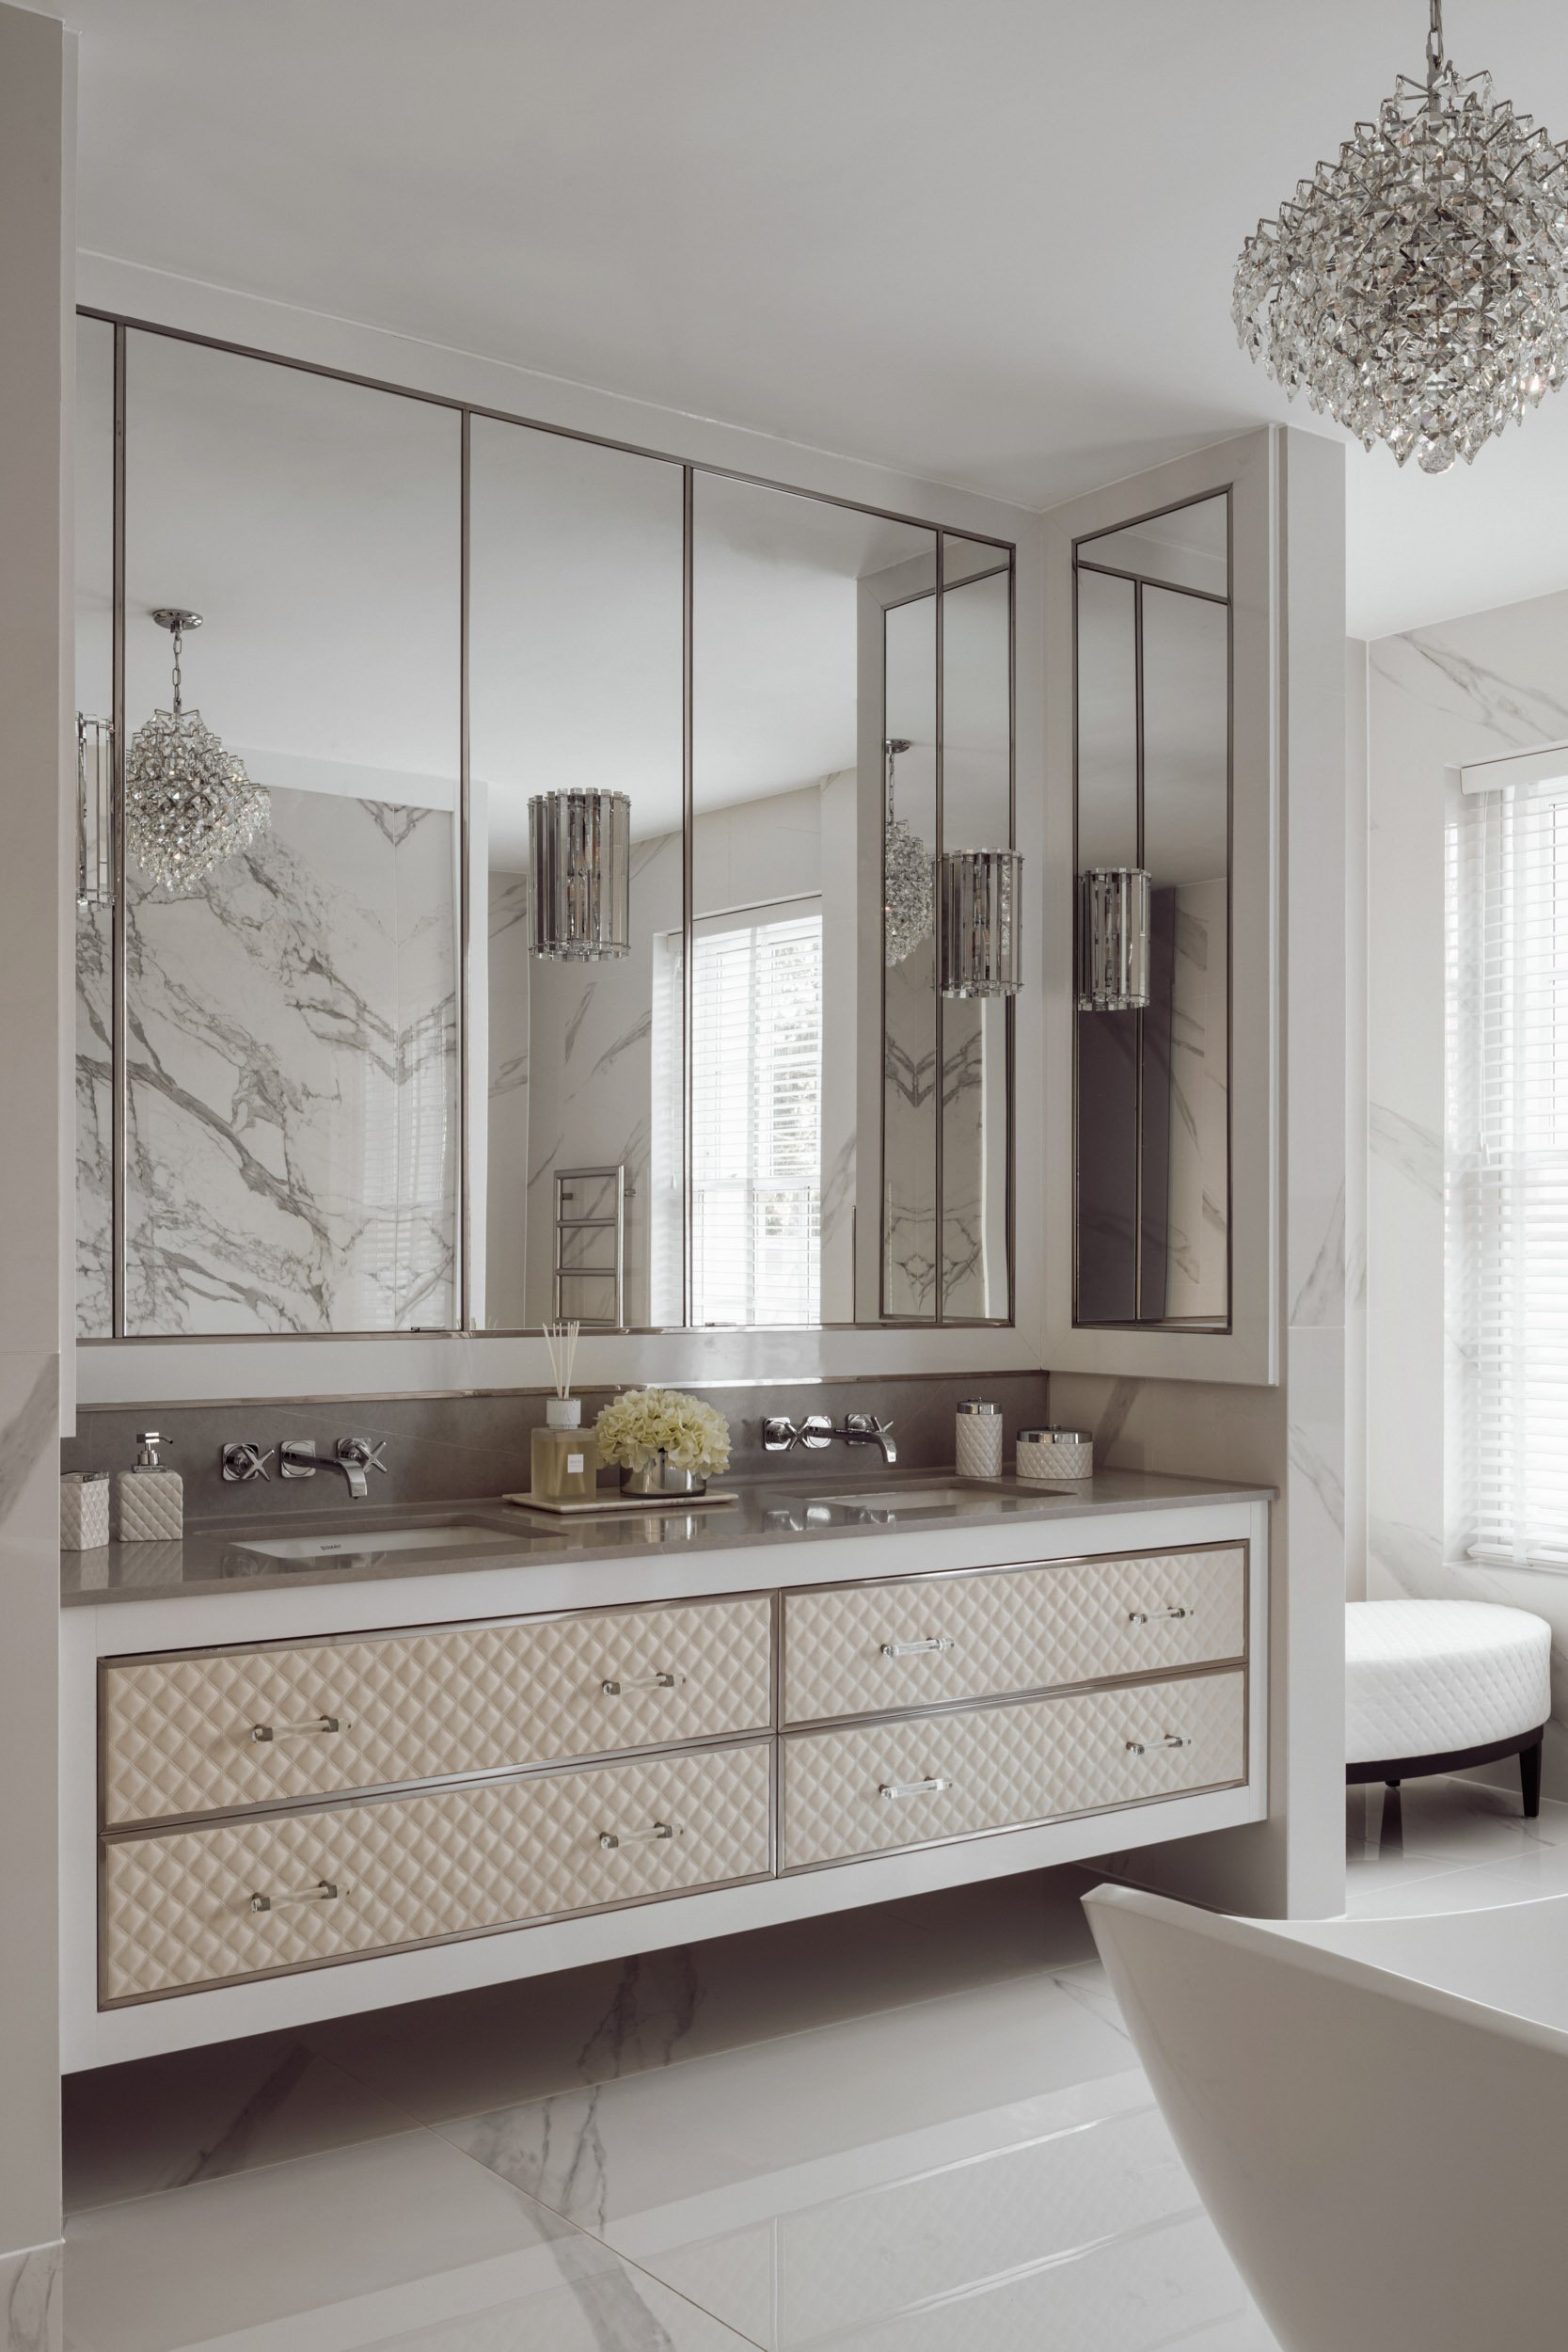 interior-design-monochrome-luxury-bathroom.jpg